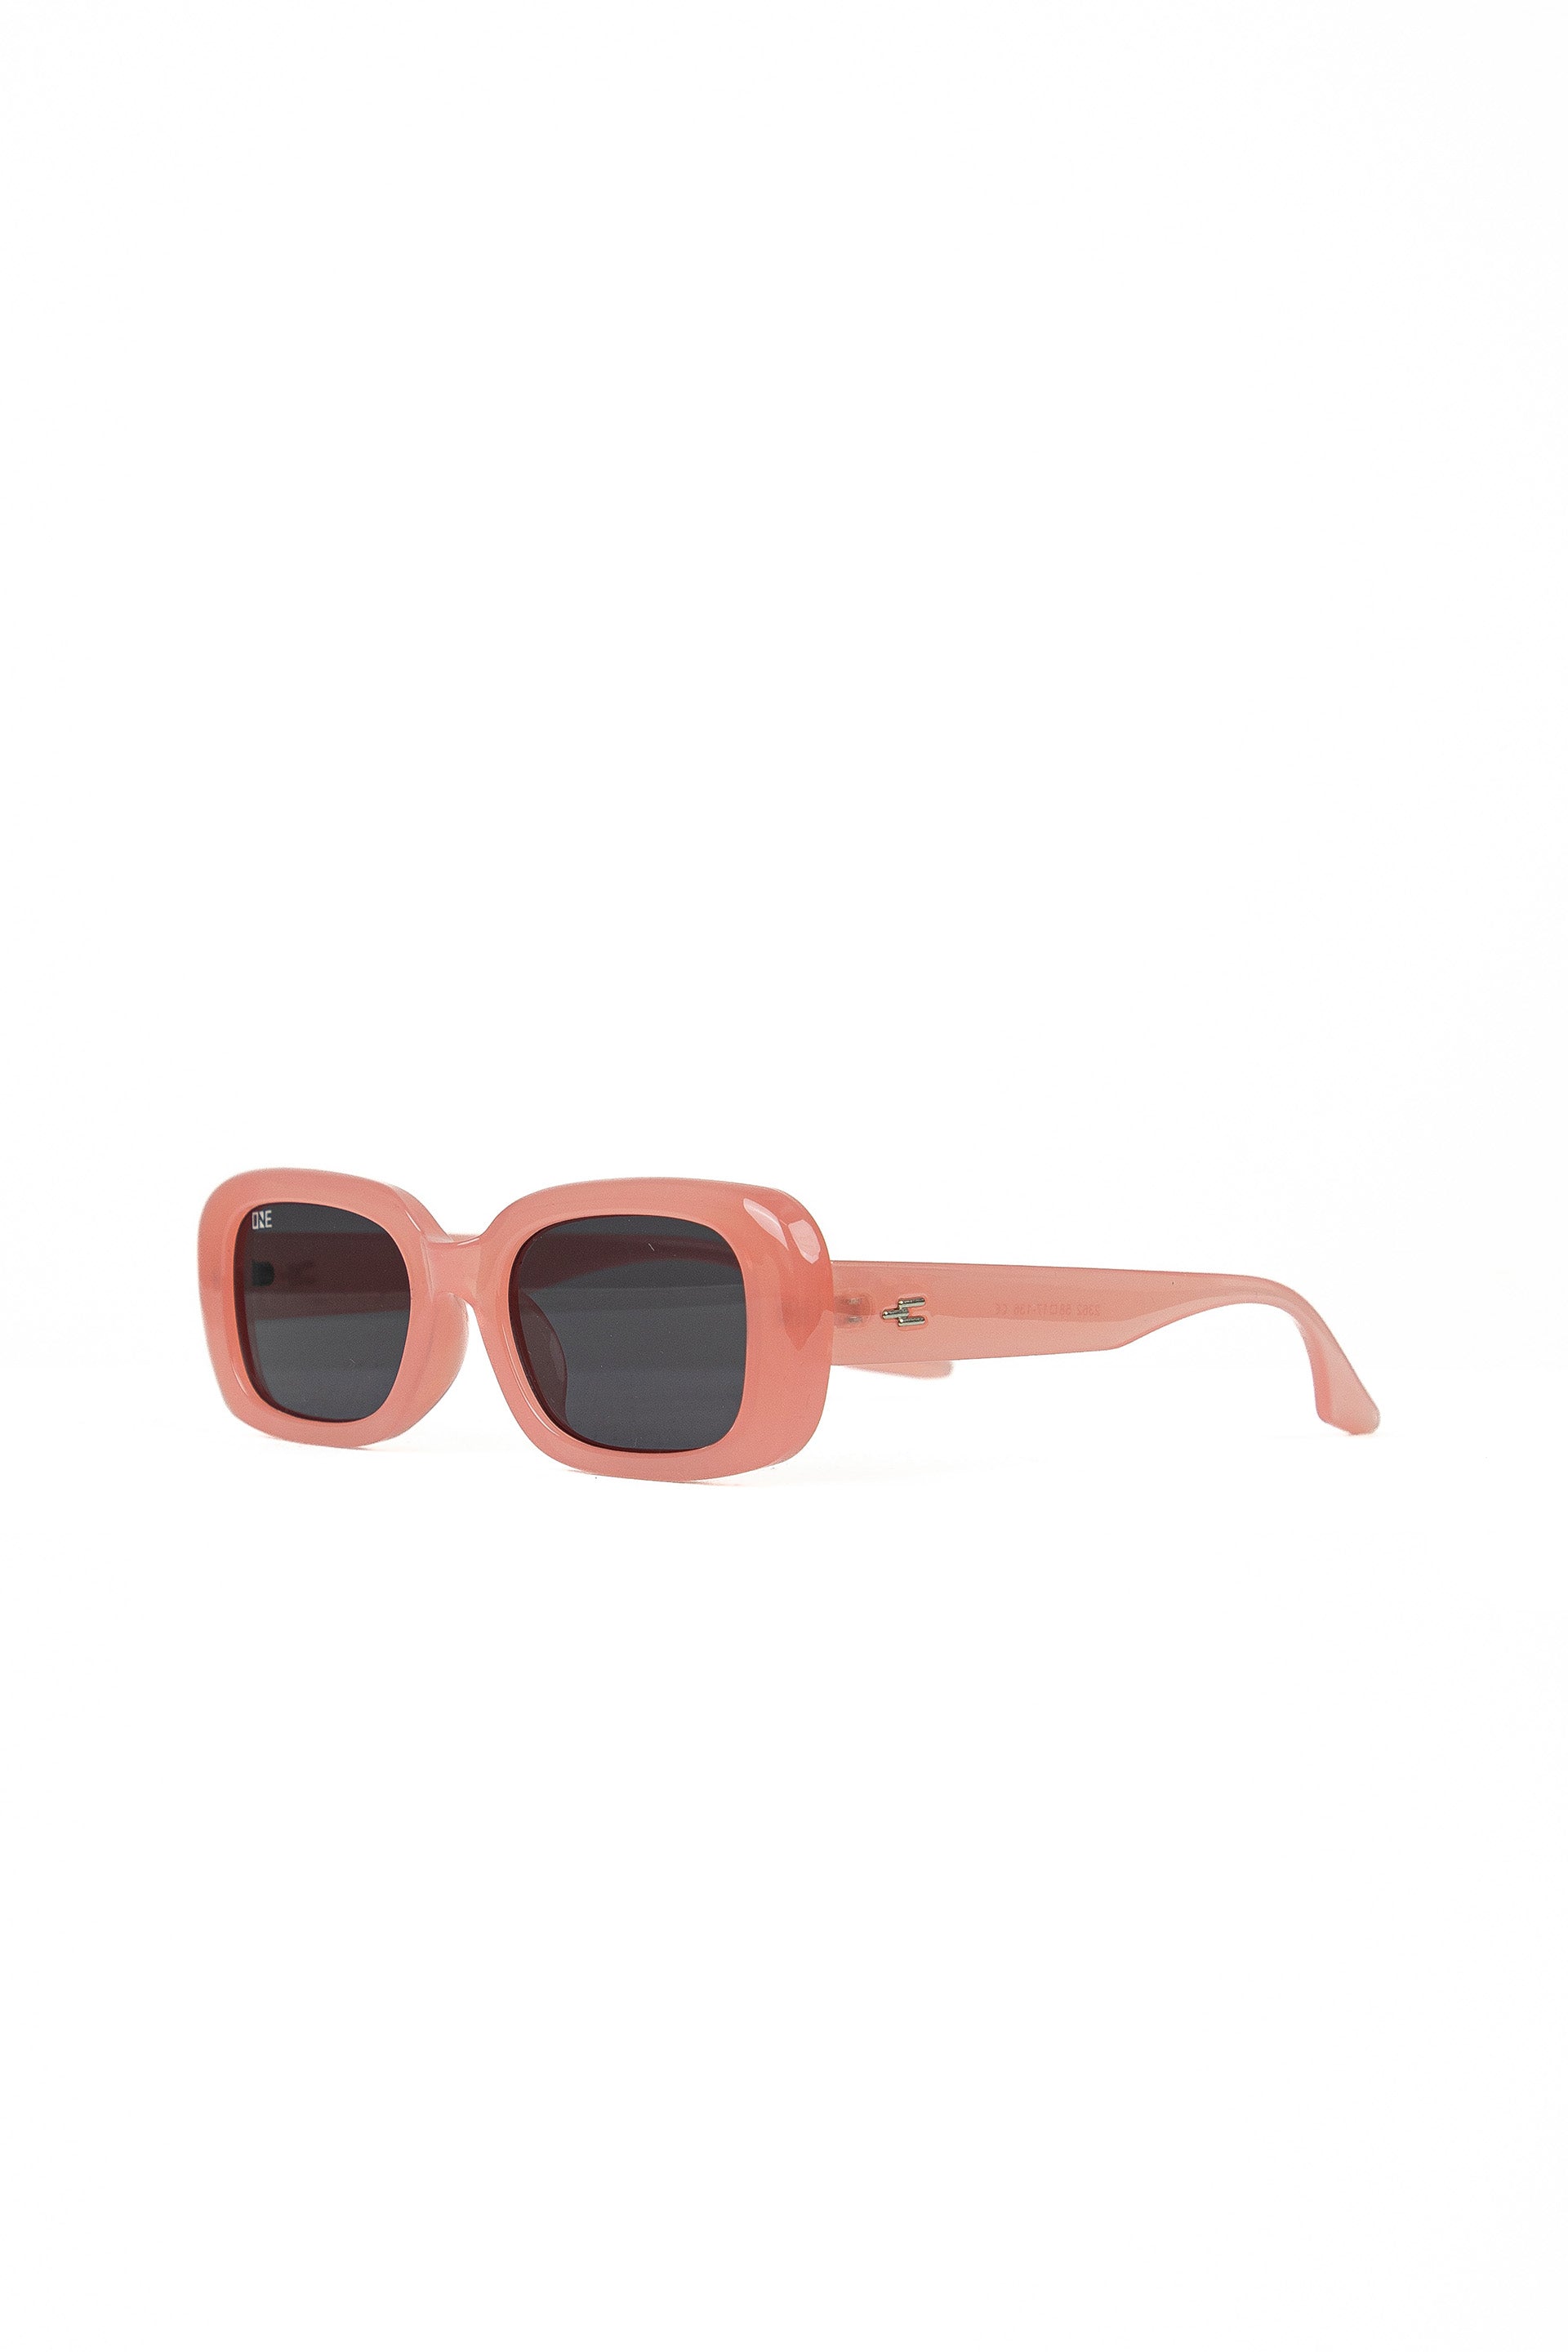 Retro Glasses Pink